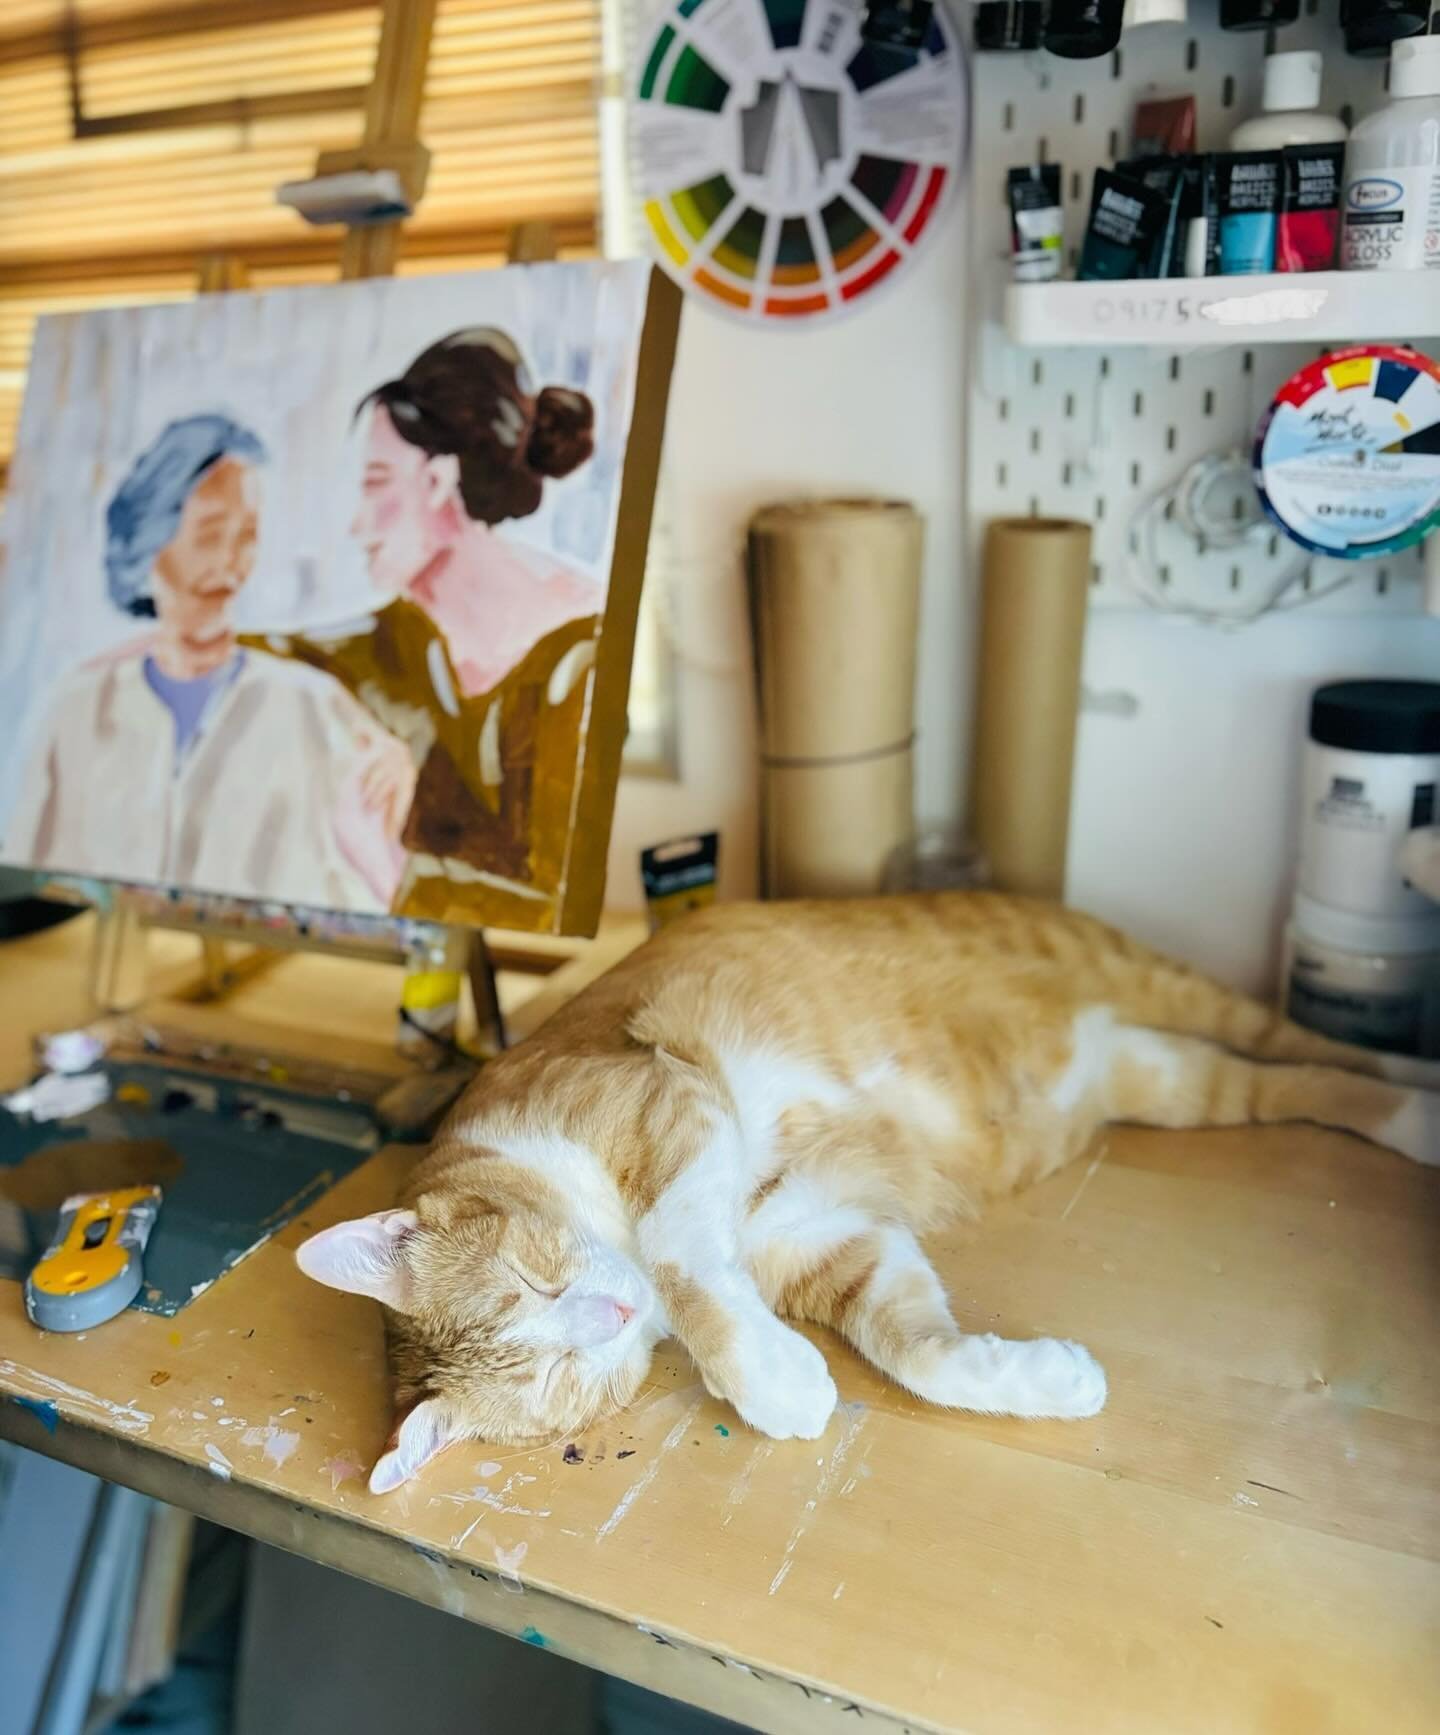 My painting companion 🐱 

#pets #catsofinstagram #acrylicpainting #impressionism